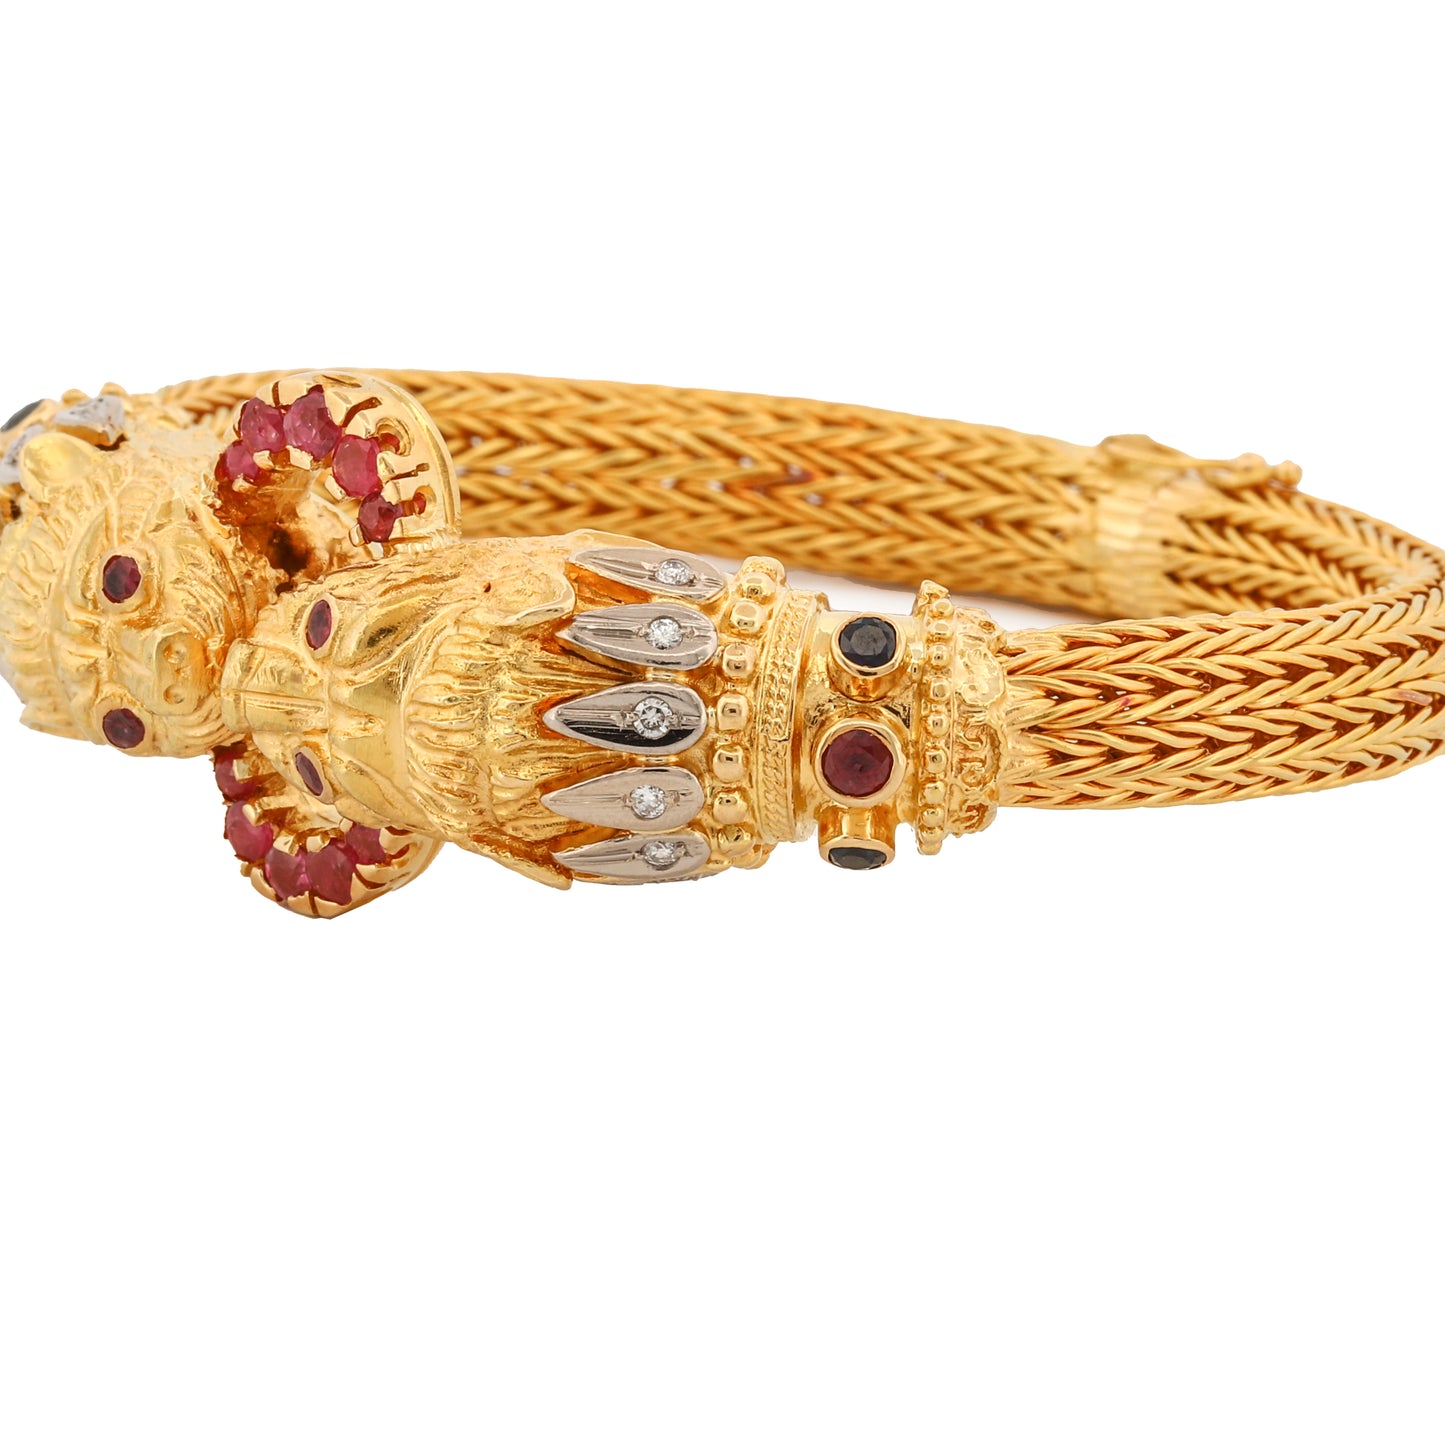 Lalaounis Double Lion Head Bracelet in 18k Yellow Gold